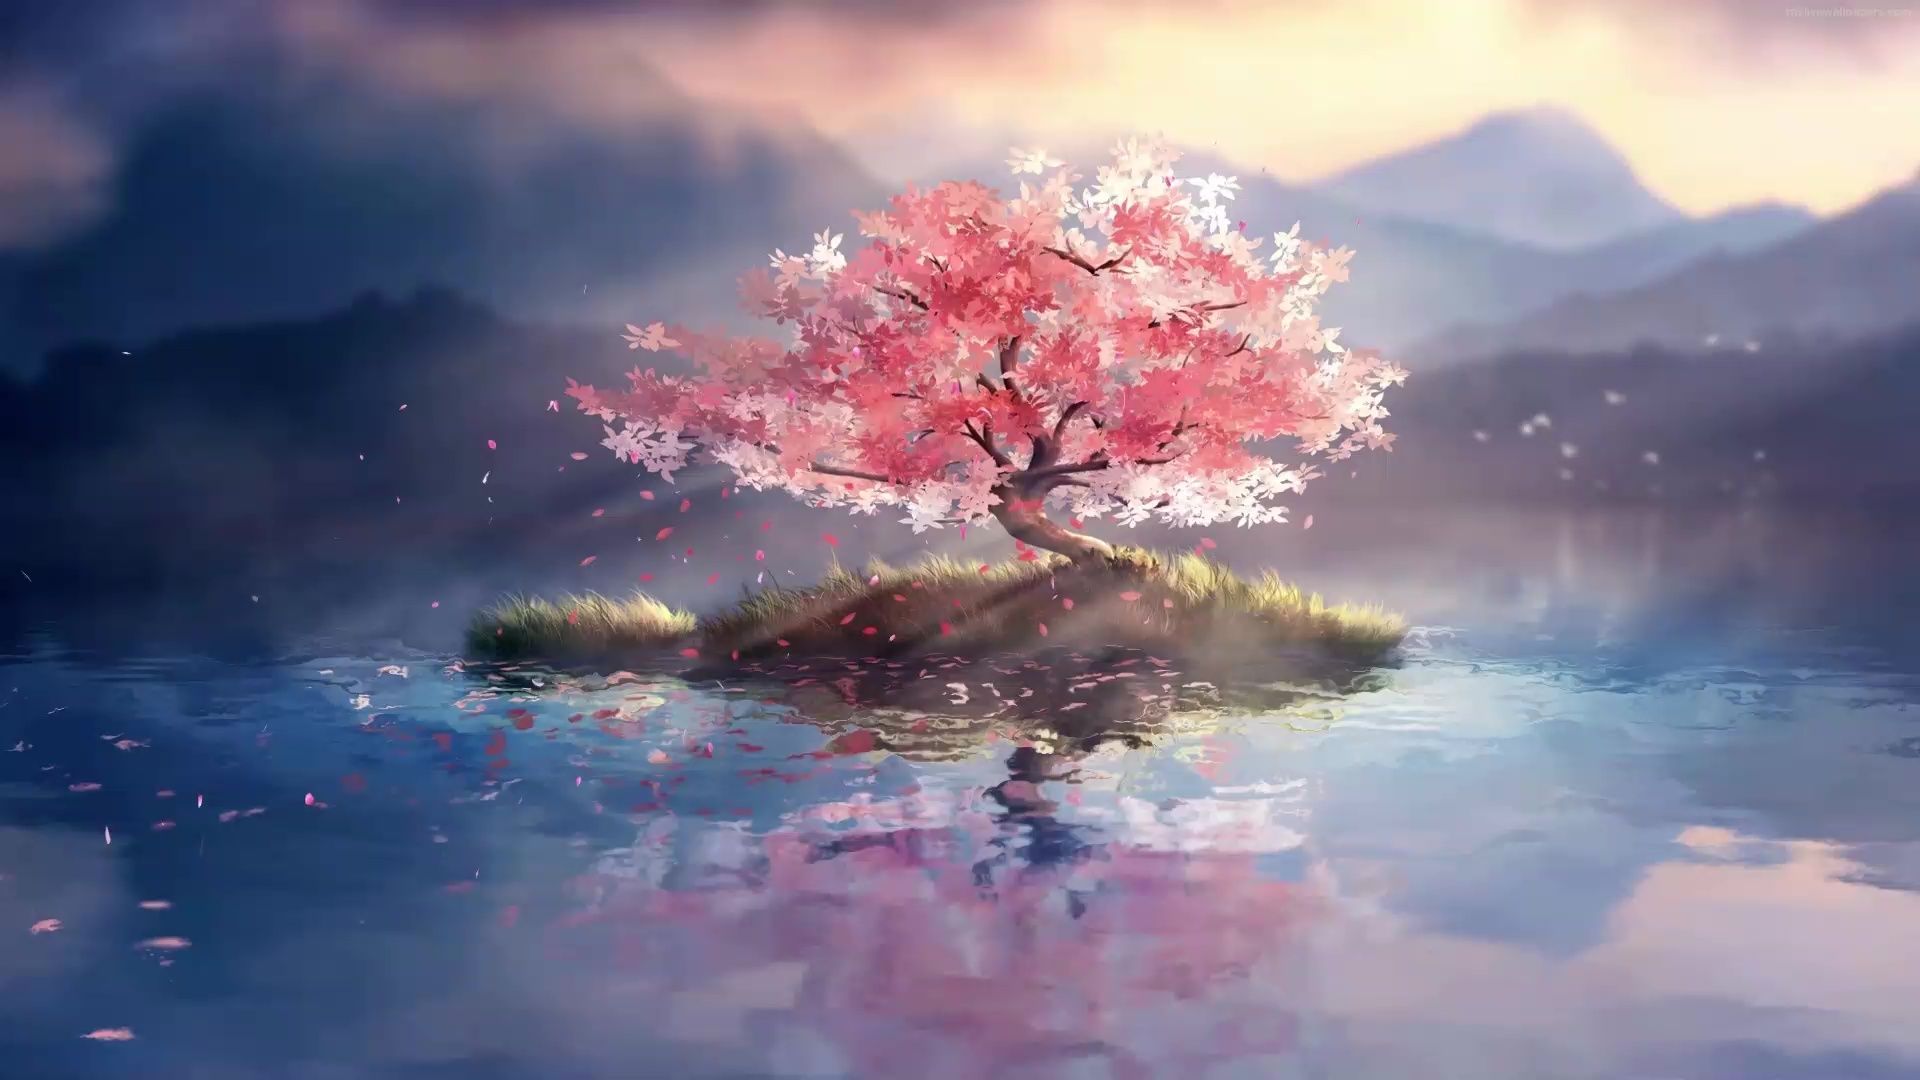 Lone Cherry Blossom Tree Live Wallpaper. Cherry blossom wallpaper, Tree wallpaper, Anime cherry blossom